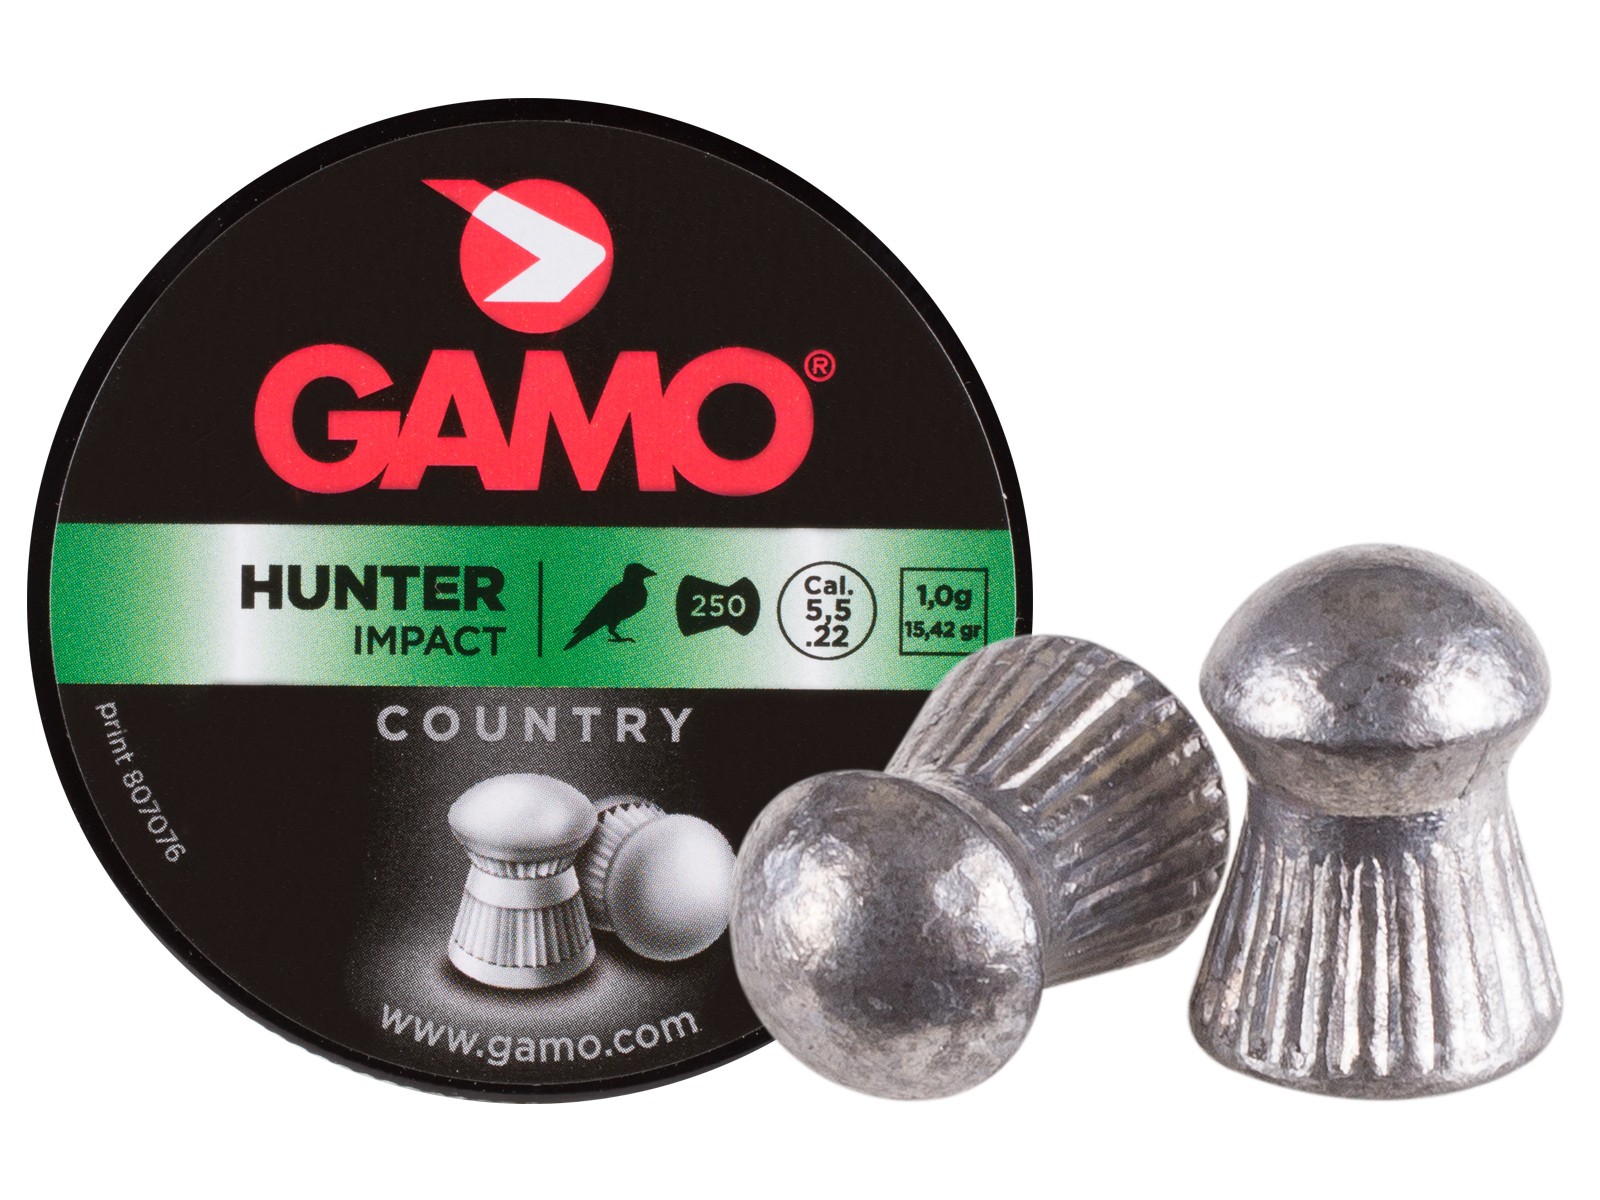 Gamo Hunter .22 Cal, 15.42 Grains, Domed, 250ct